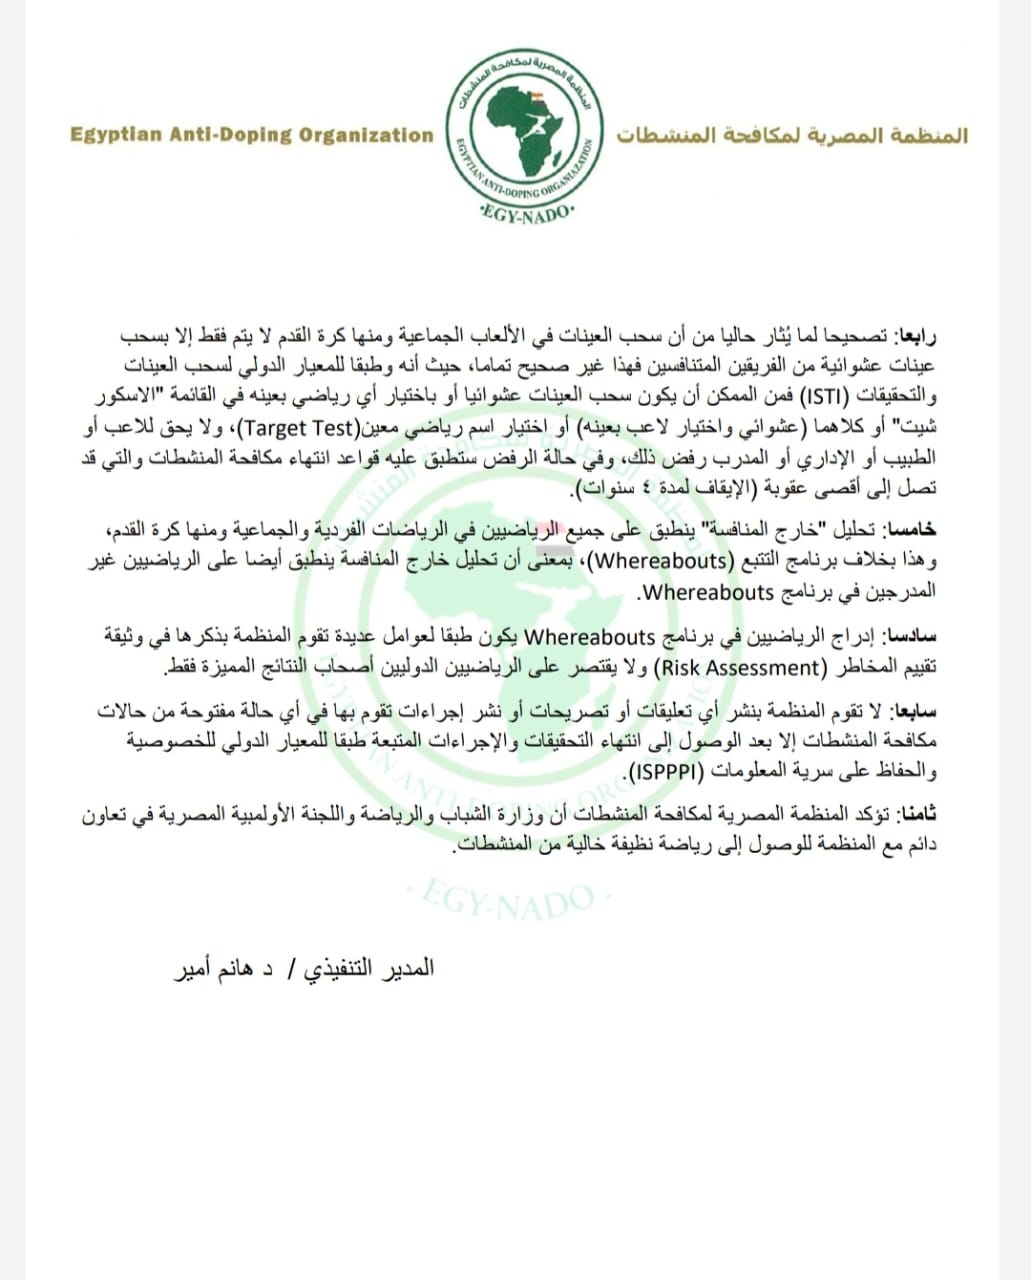 Important statement from the Egyptian Anti-Doping Organization regarding the Zamalek incident